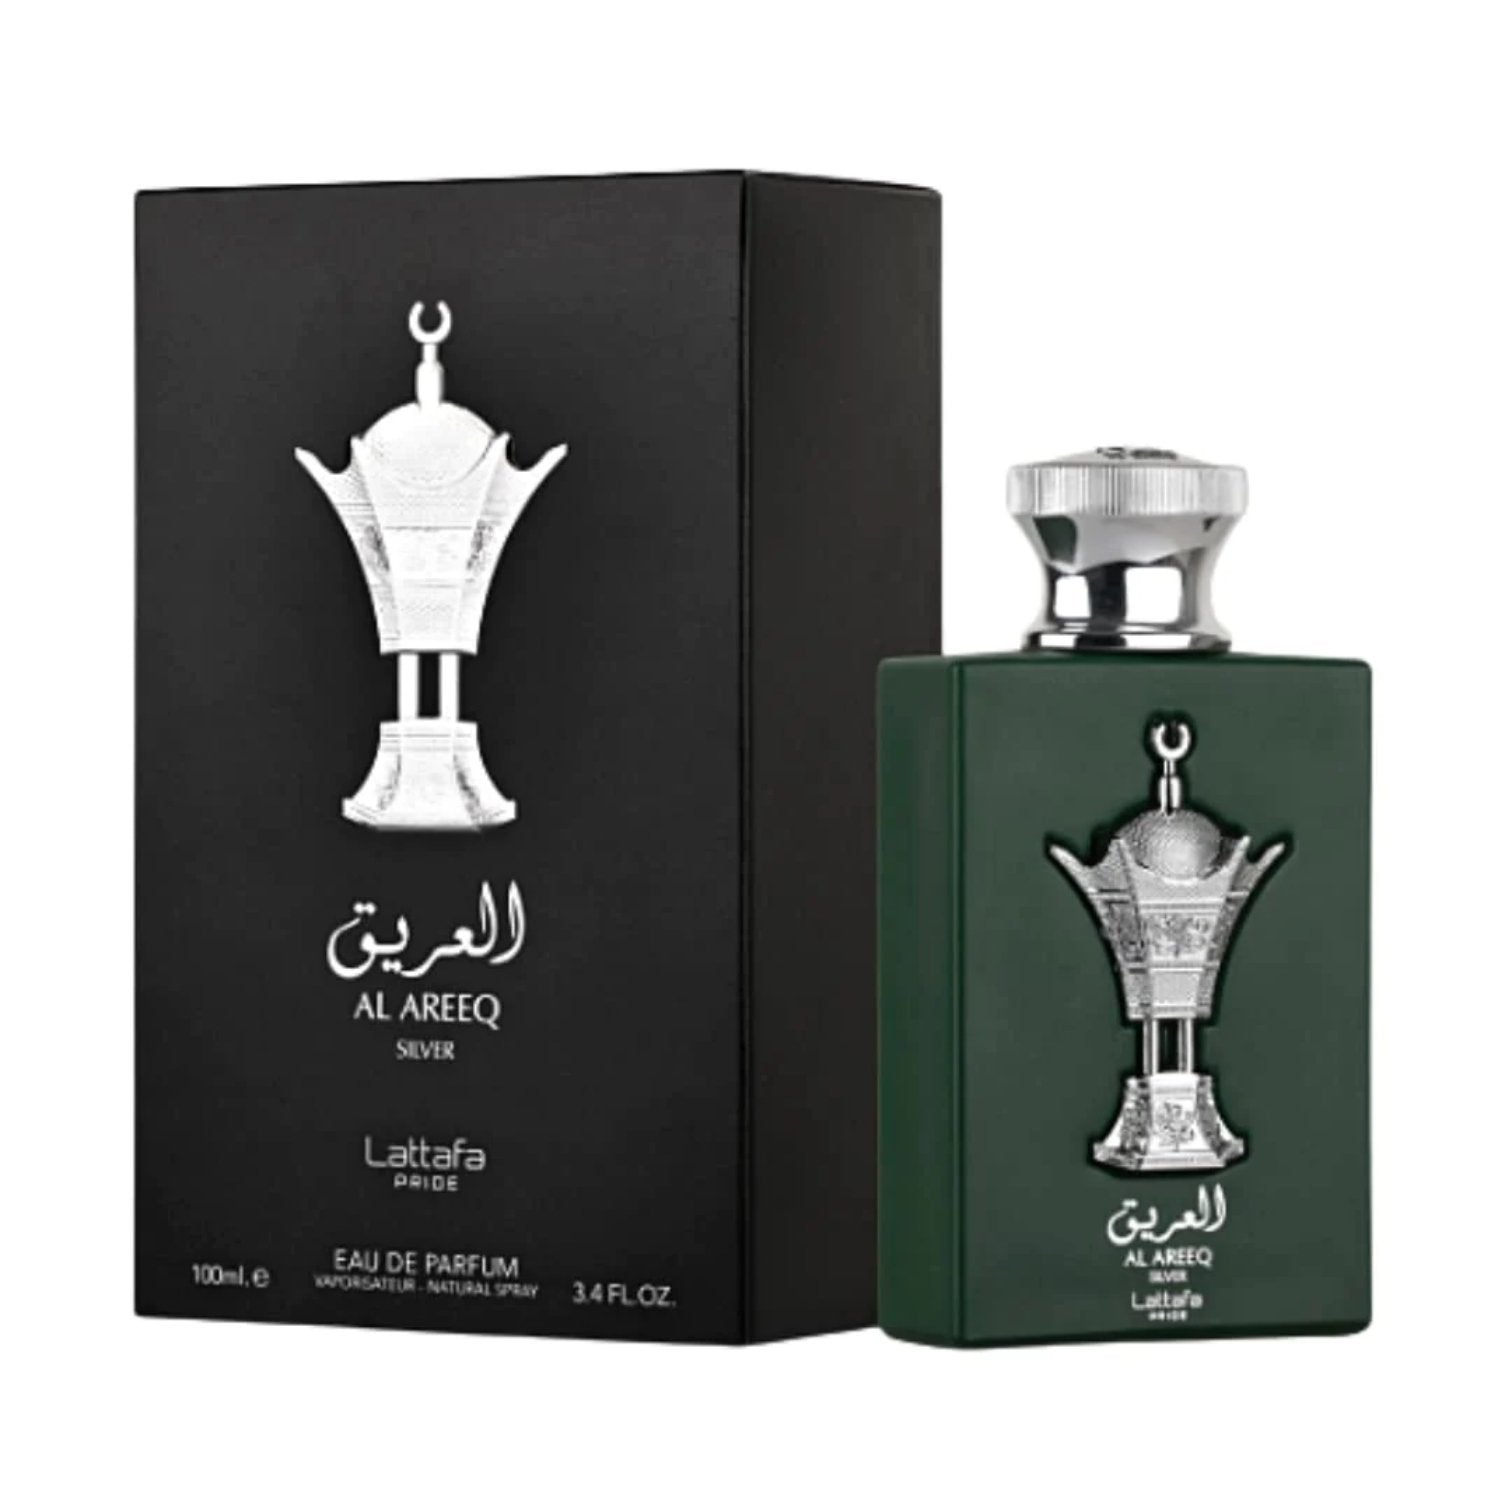 Al Areeq Silver 100ml EDP from Lattafa's Luxury Range